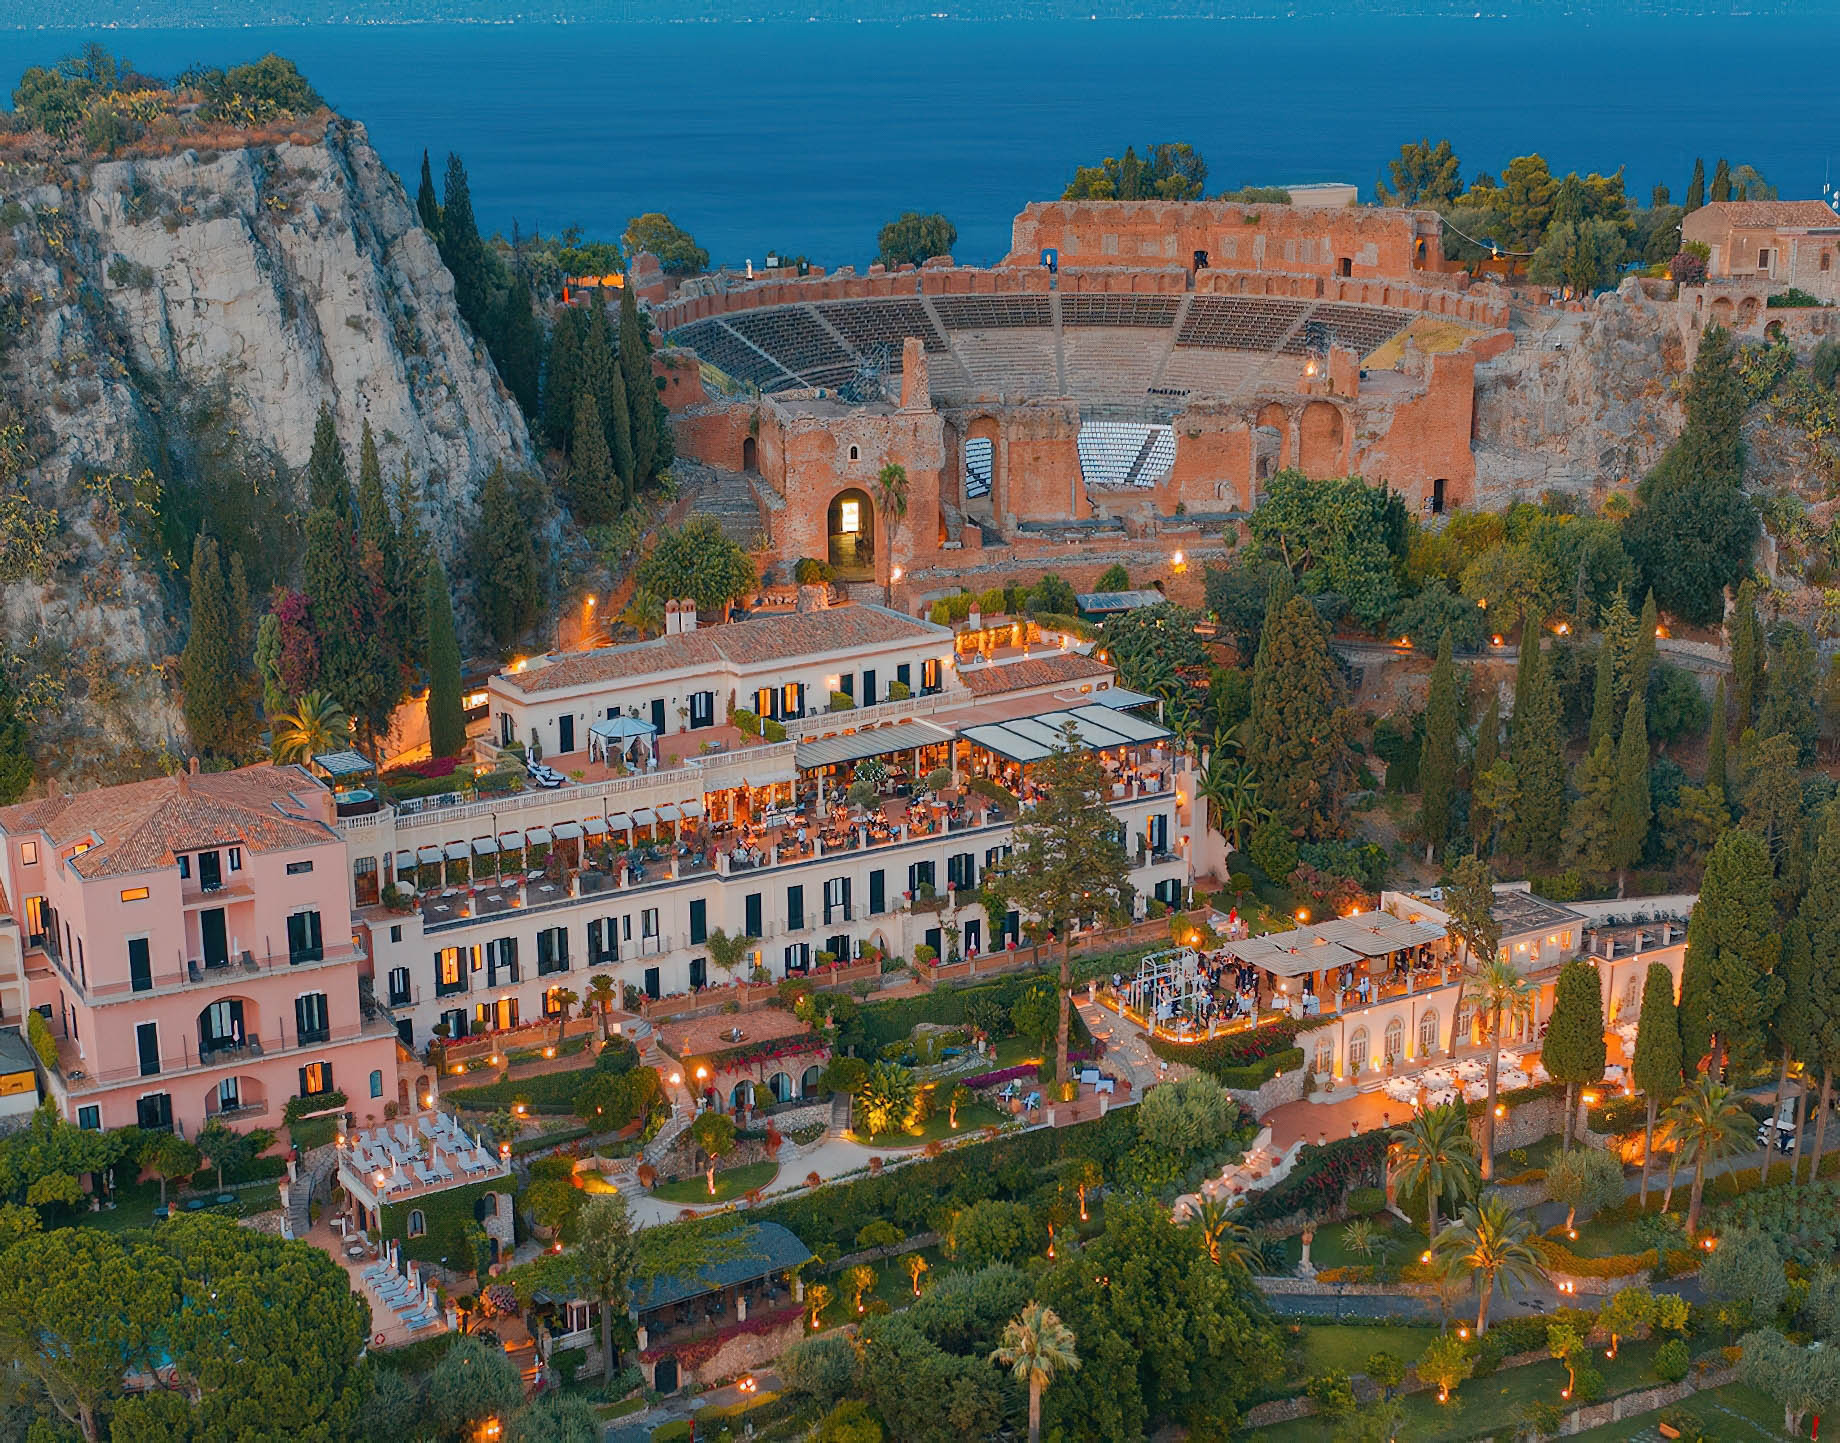 192 – Grand Hotel Timeo, A Belmond Hotel – Taormina, Italy